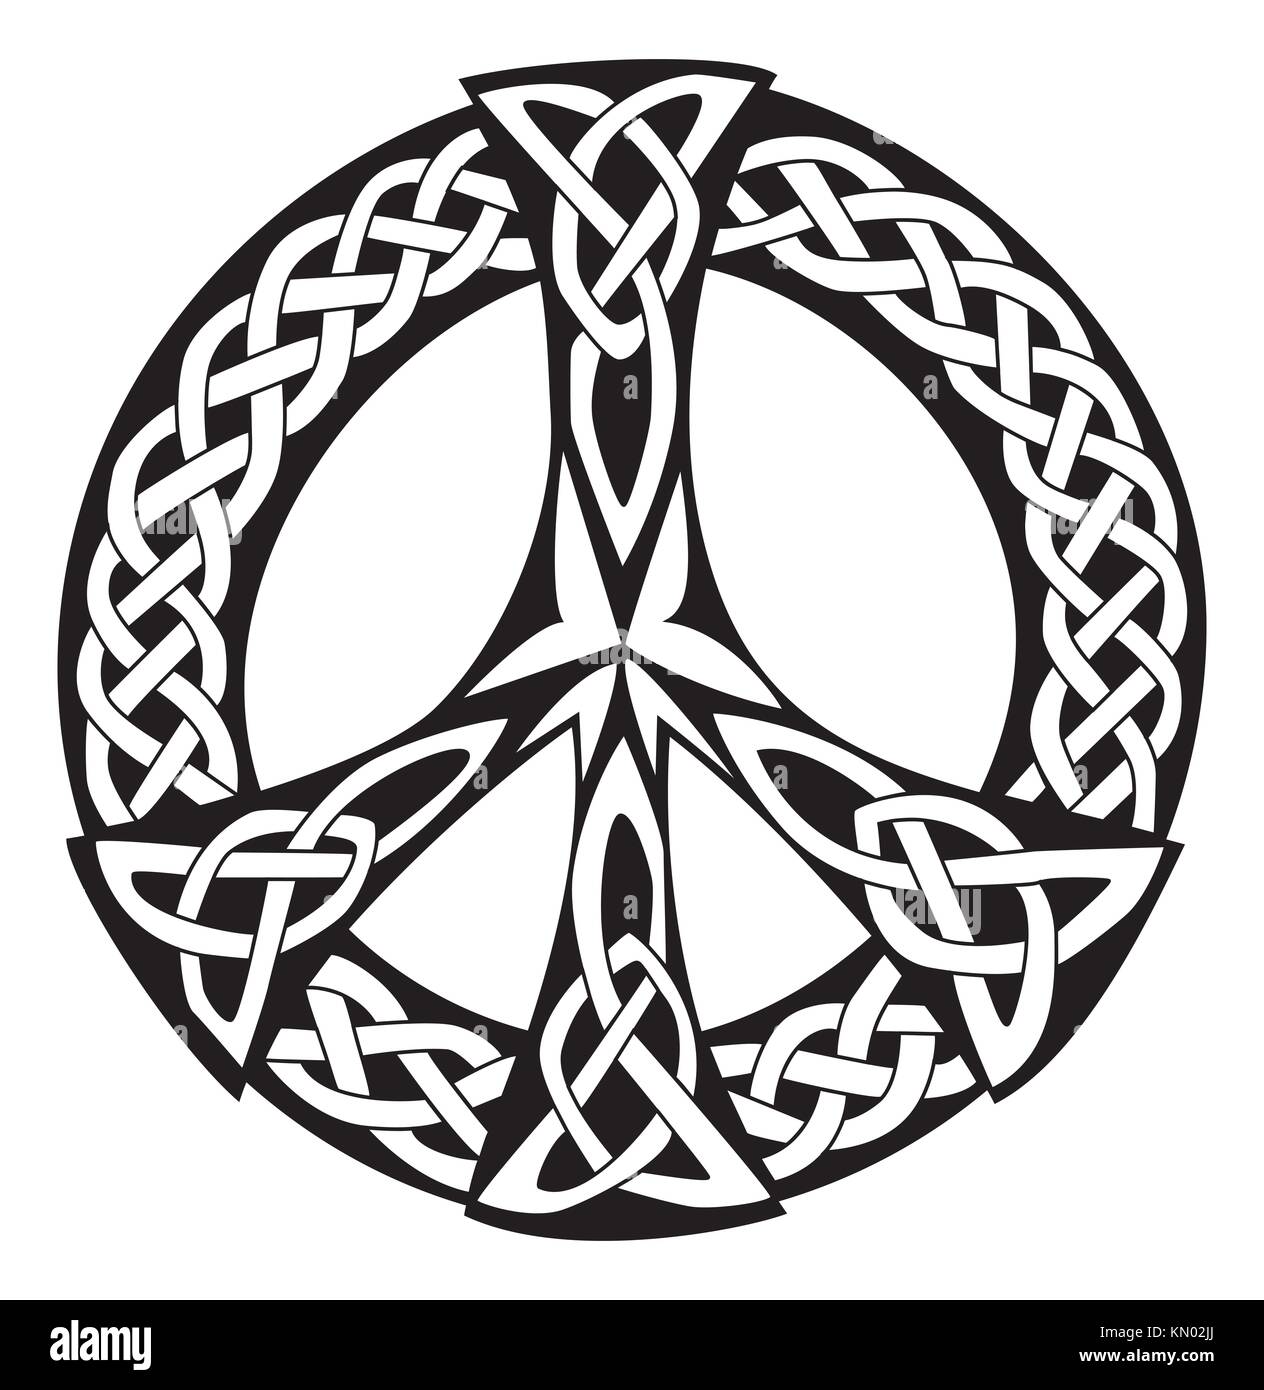 Celtic Design - Peace symbol Stock Photo